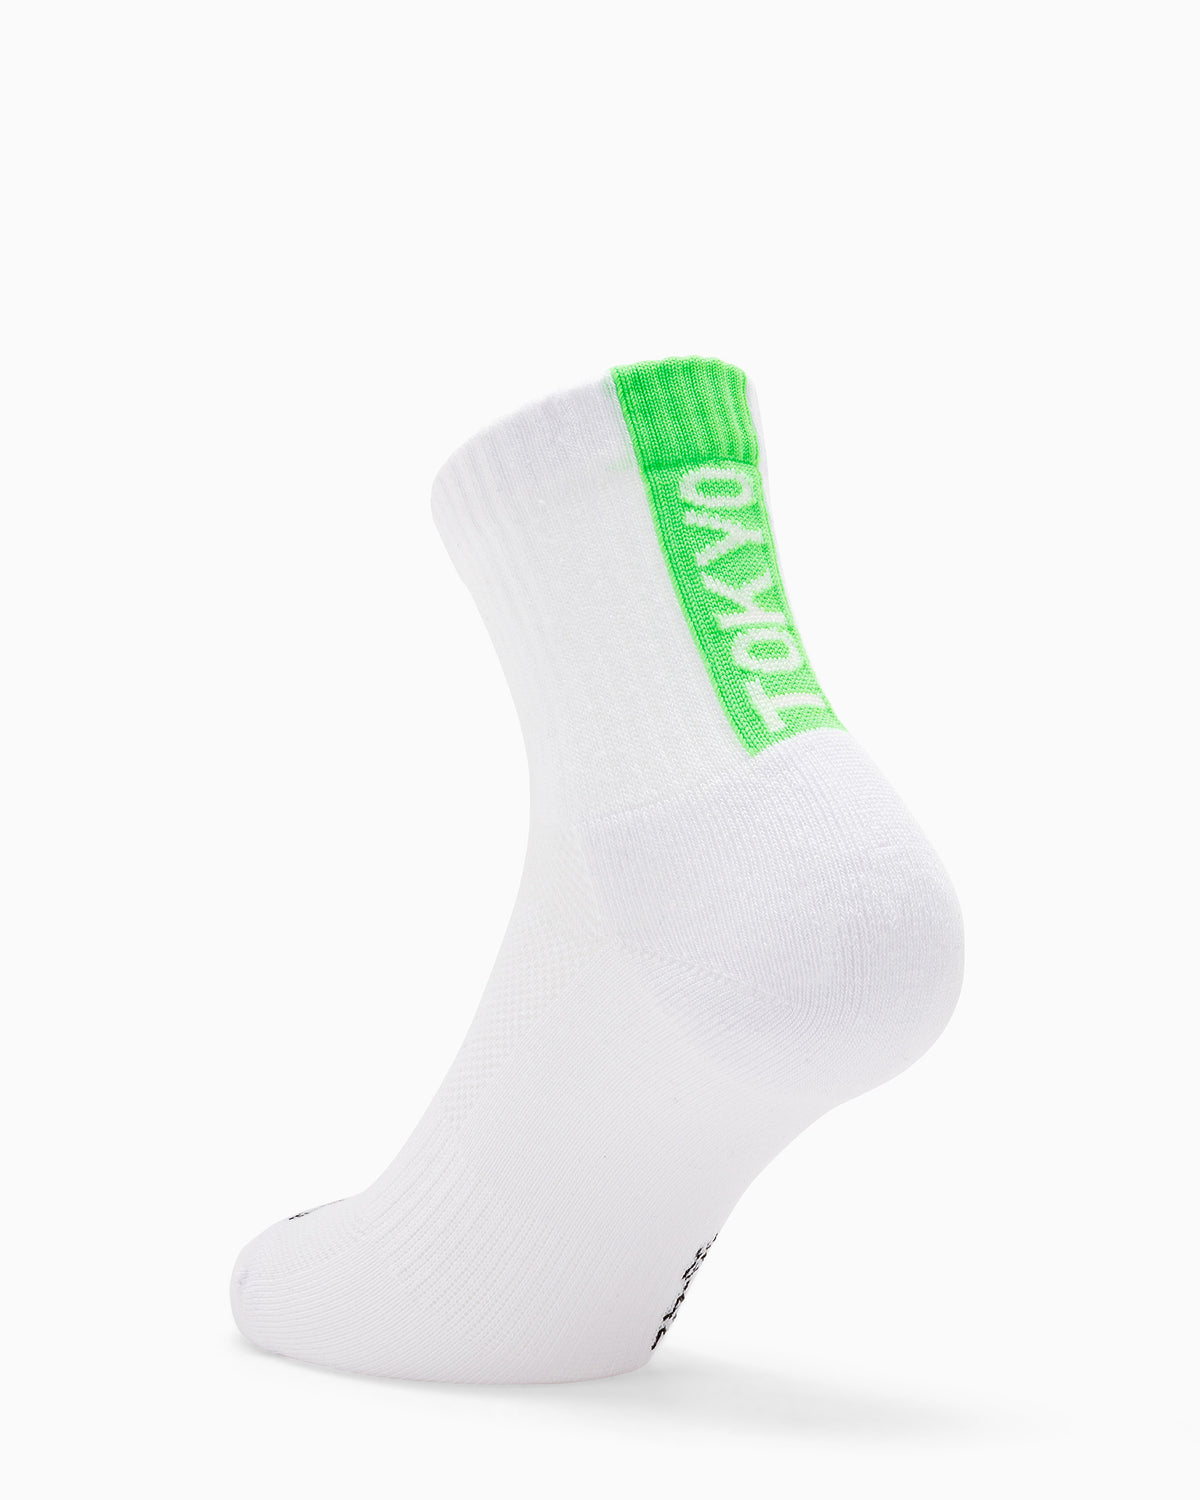 Tokyo unisex tennis short sock